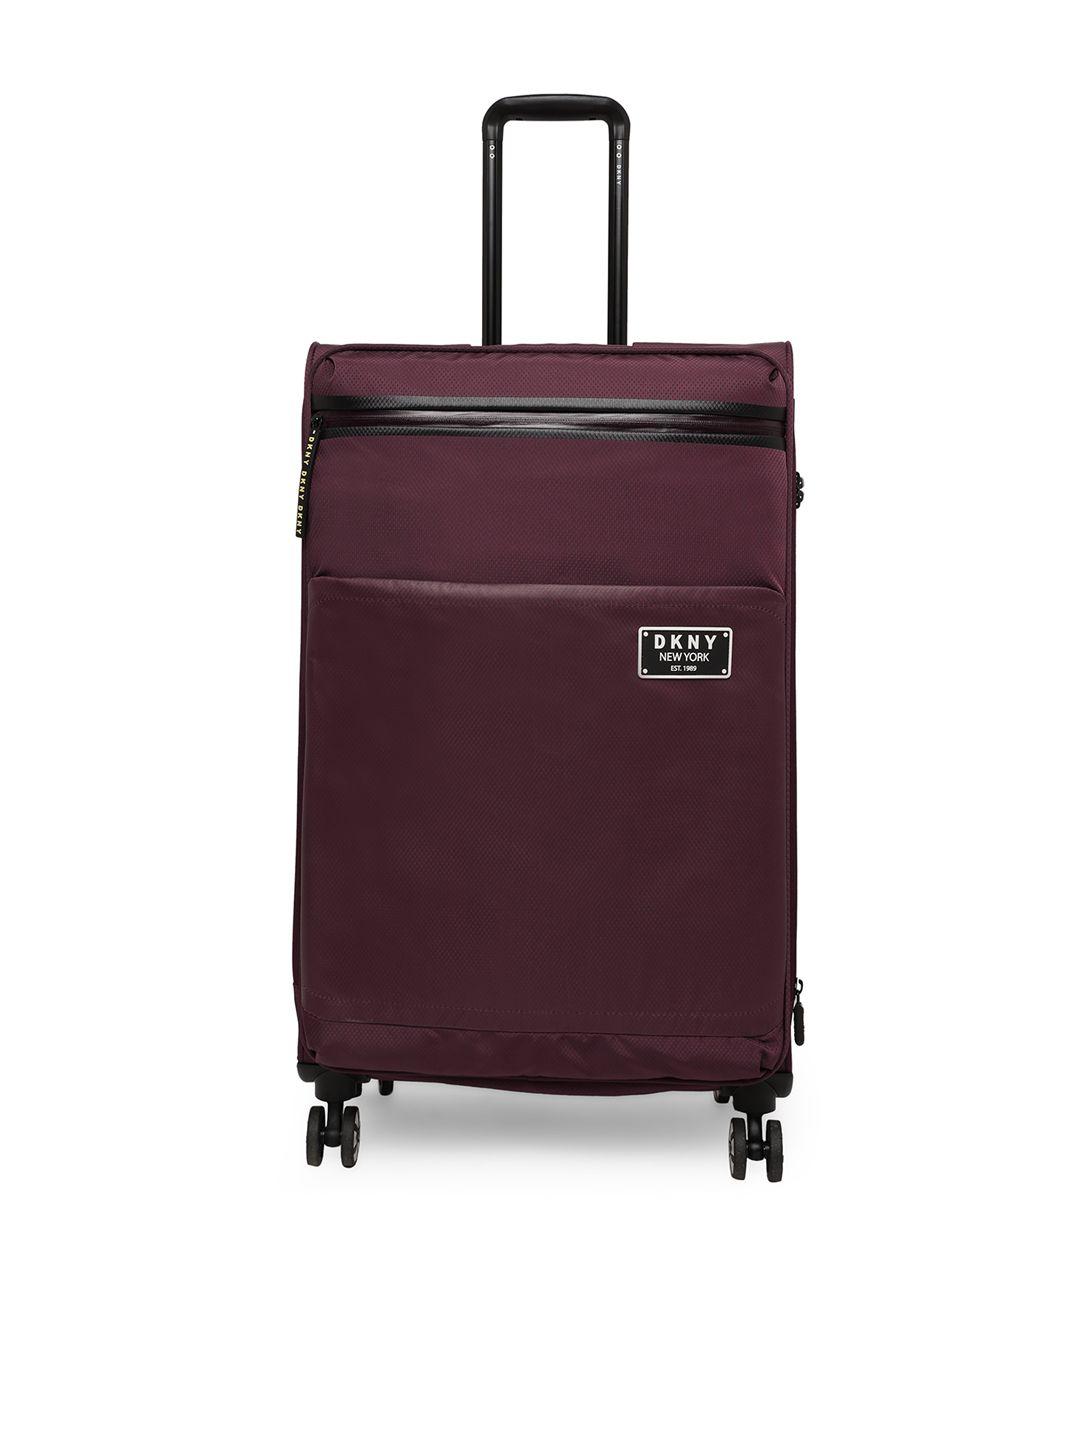 dkny burgundy textured globe trotter soft-sided medium trolley suitcase